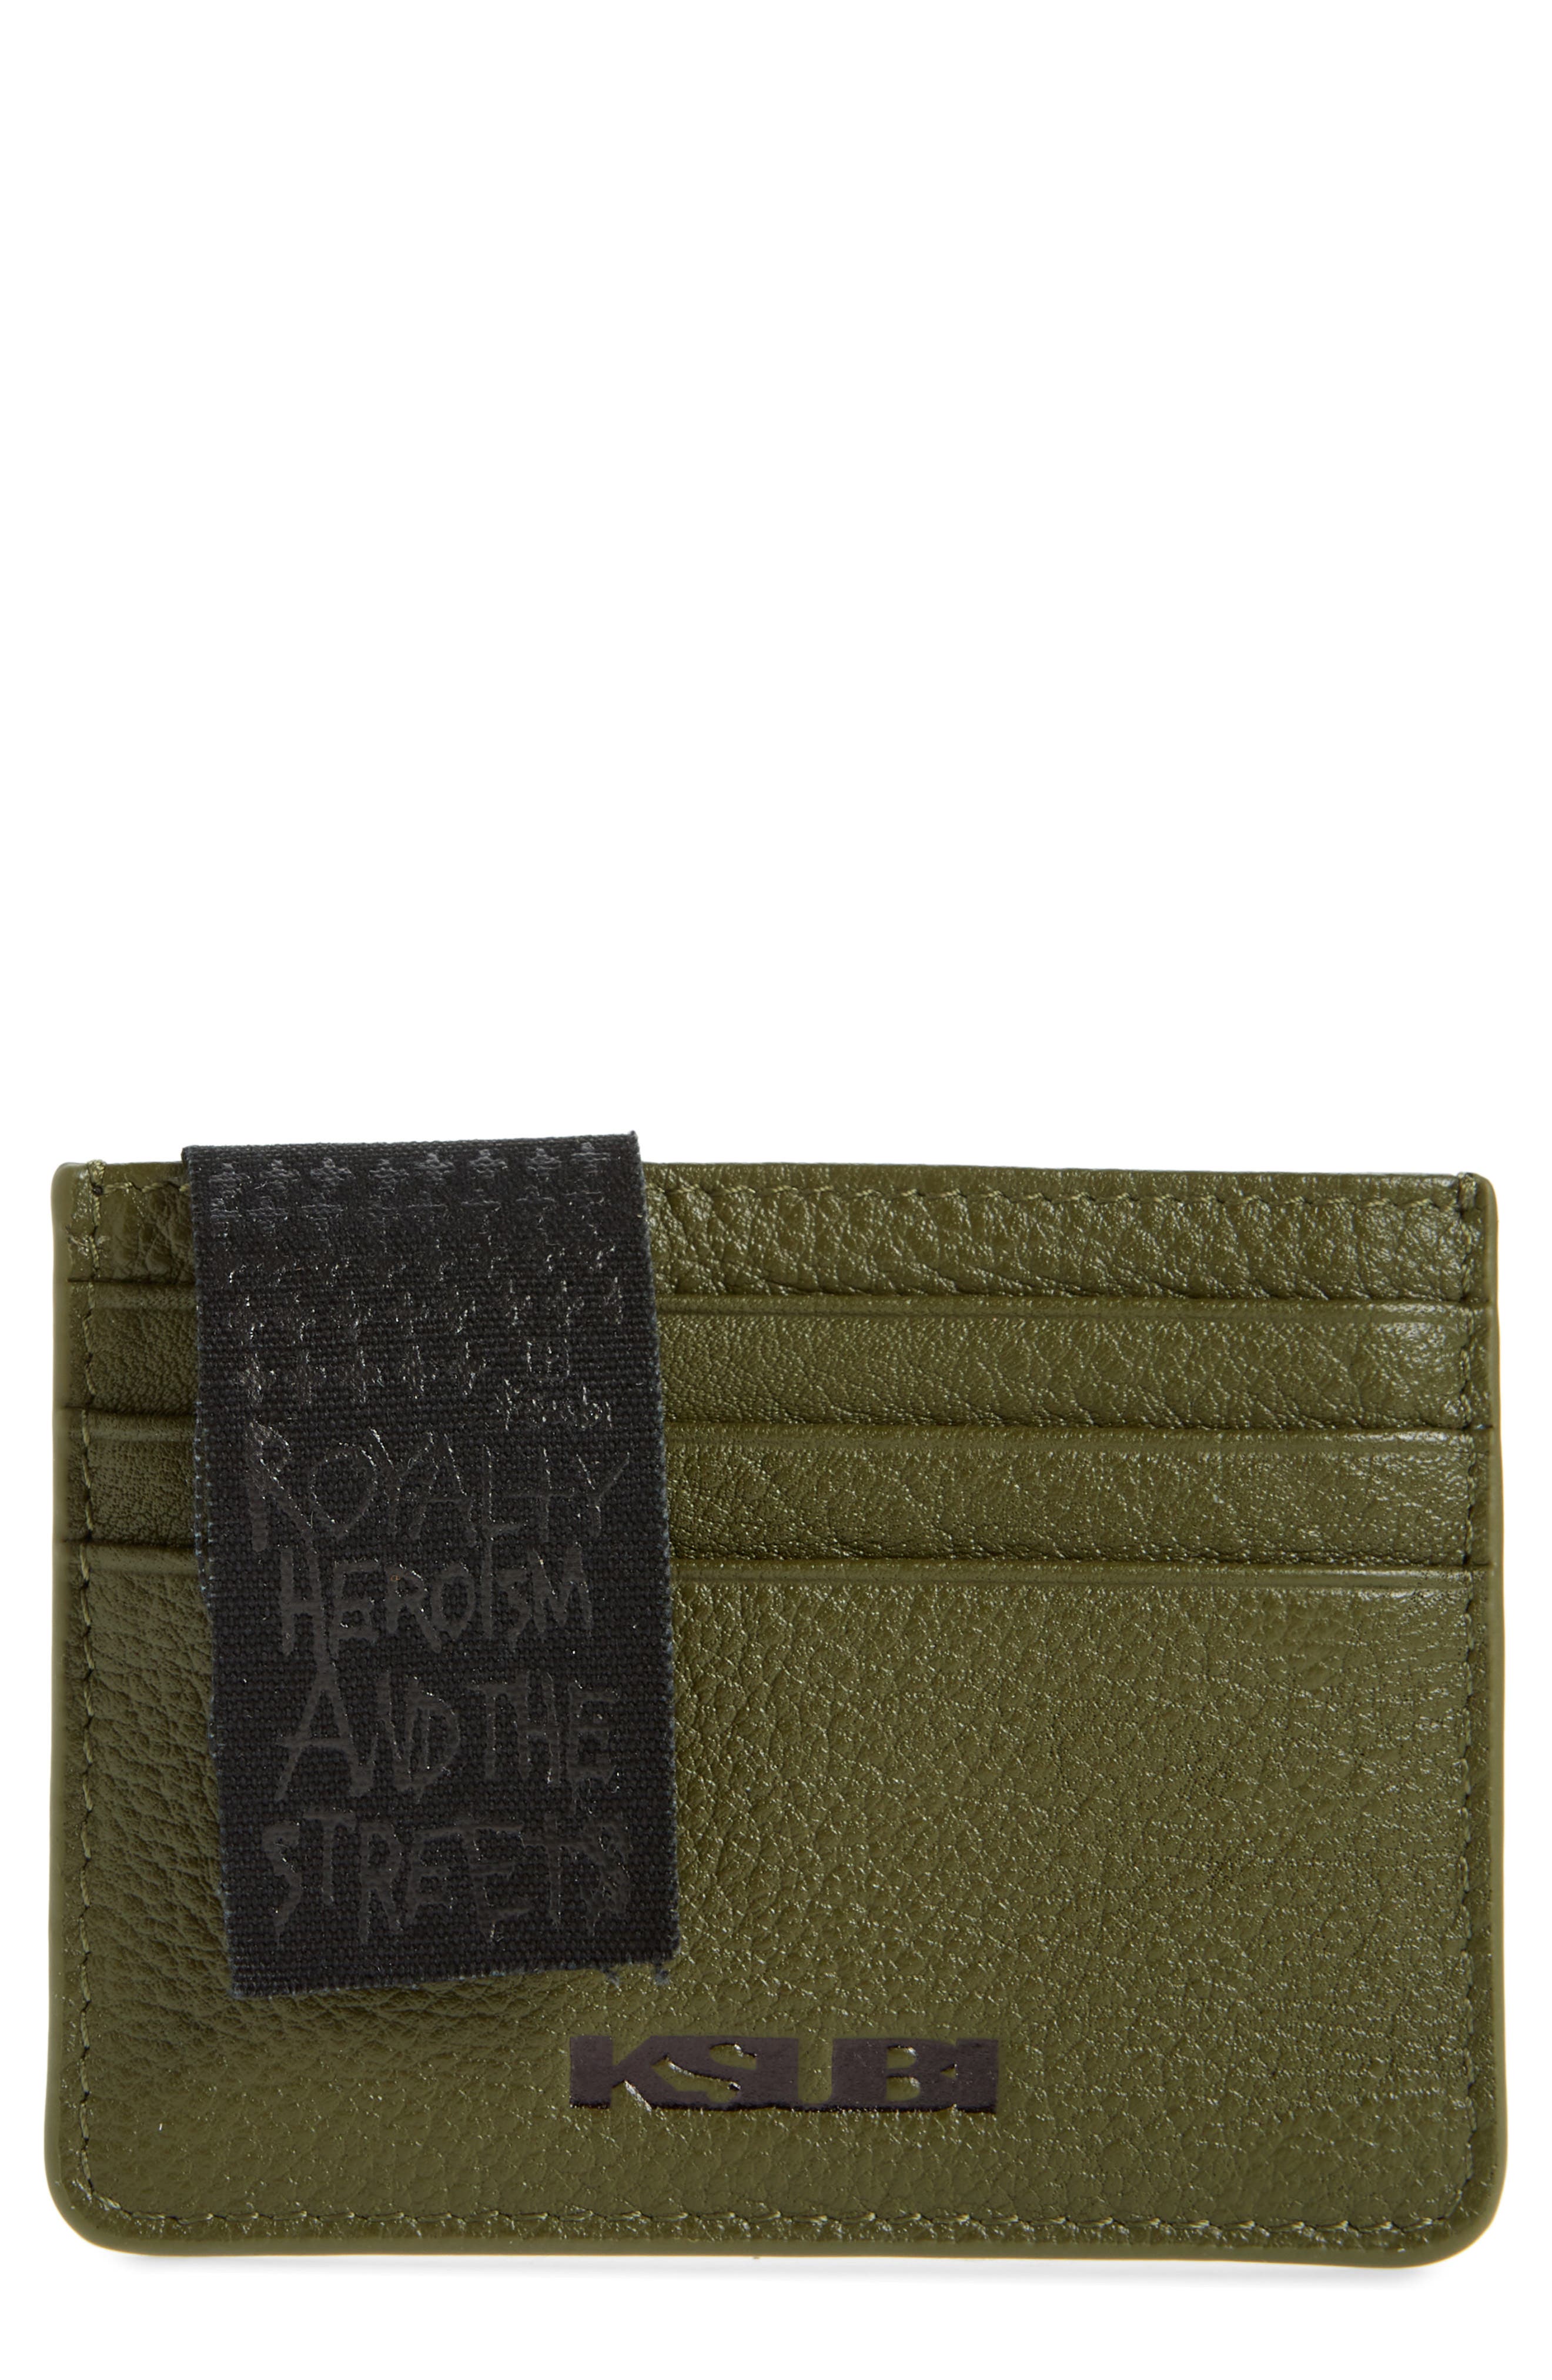 Ksubi Kredit CC Leather Card Case in Green at Nordstrom